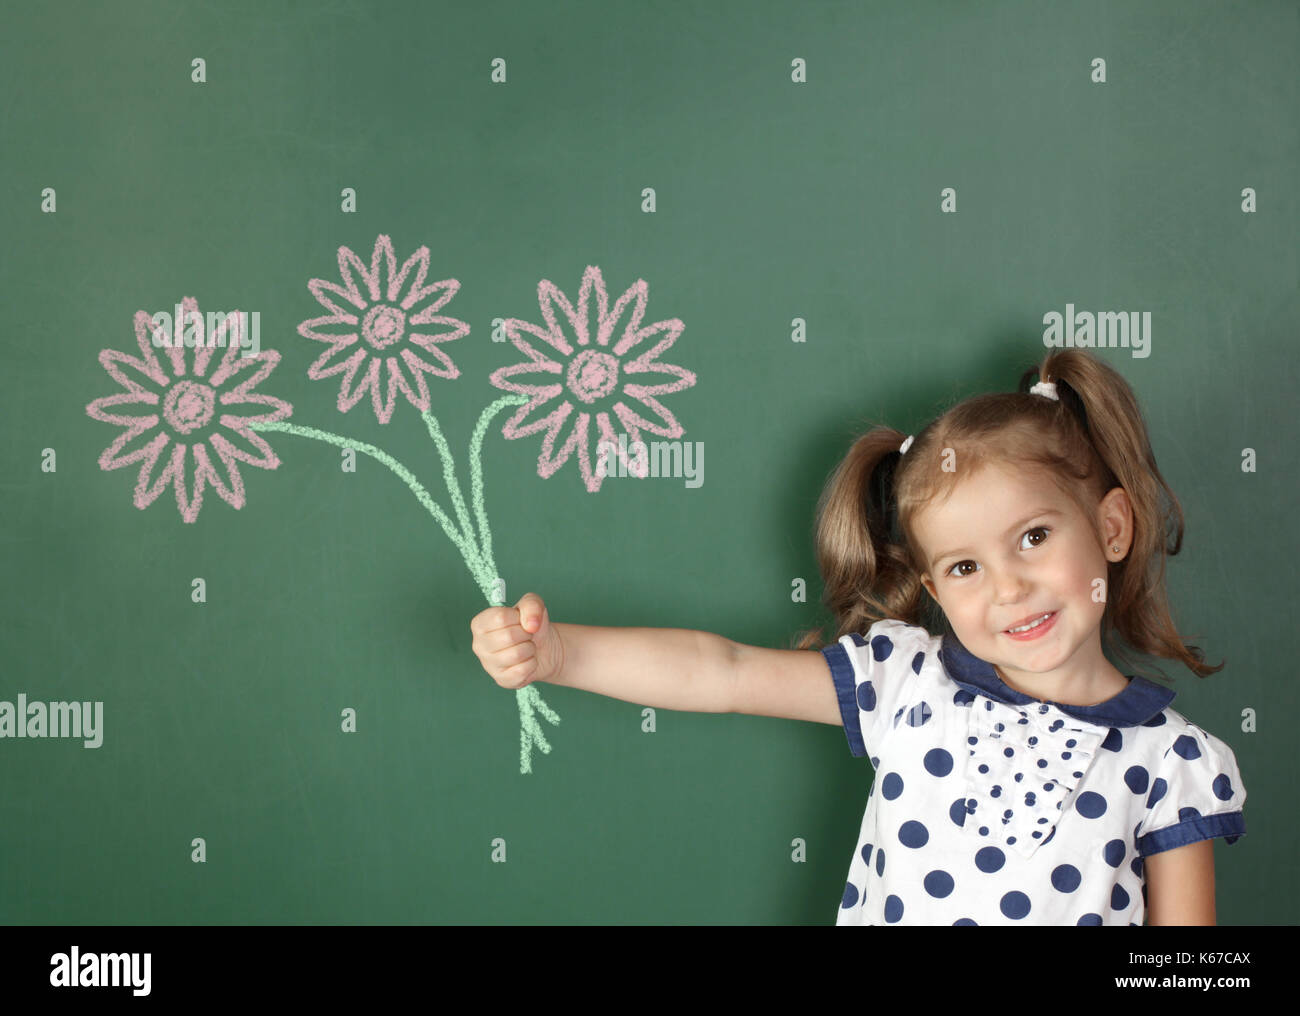 Smiling child hold drawn flowers near school blackboard Stock Photo